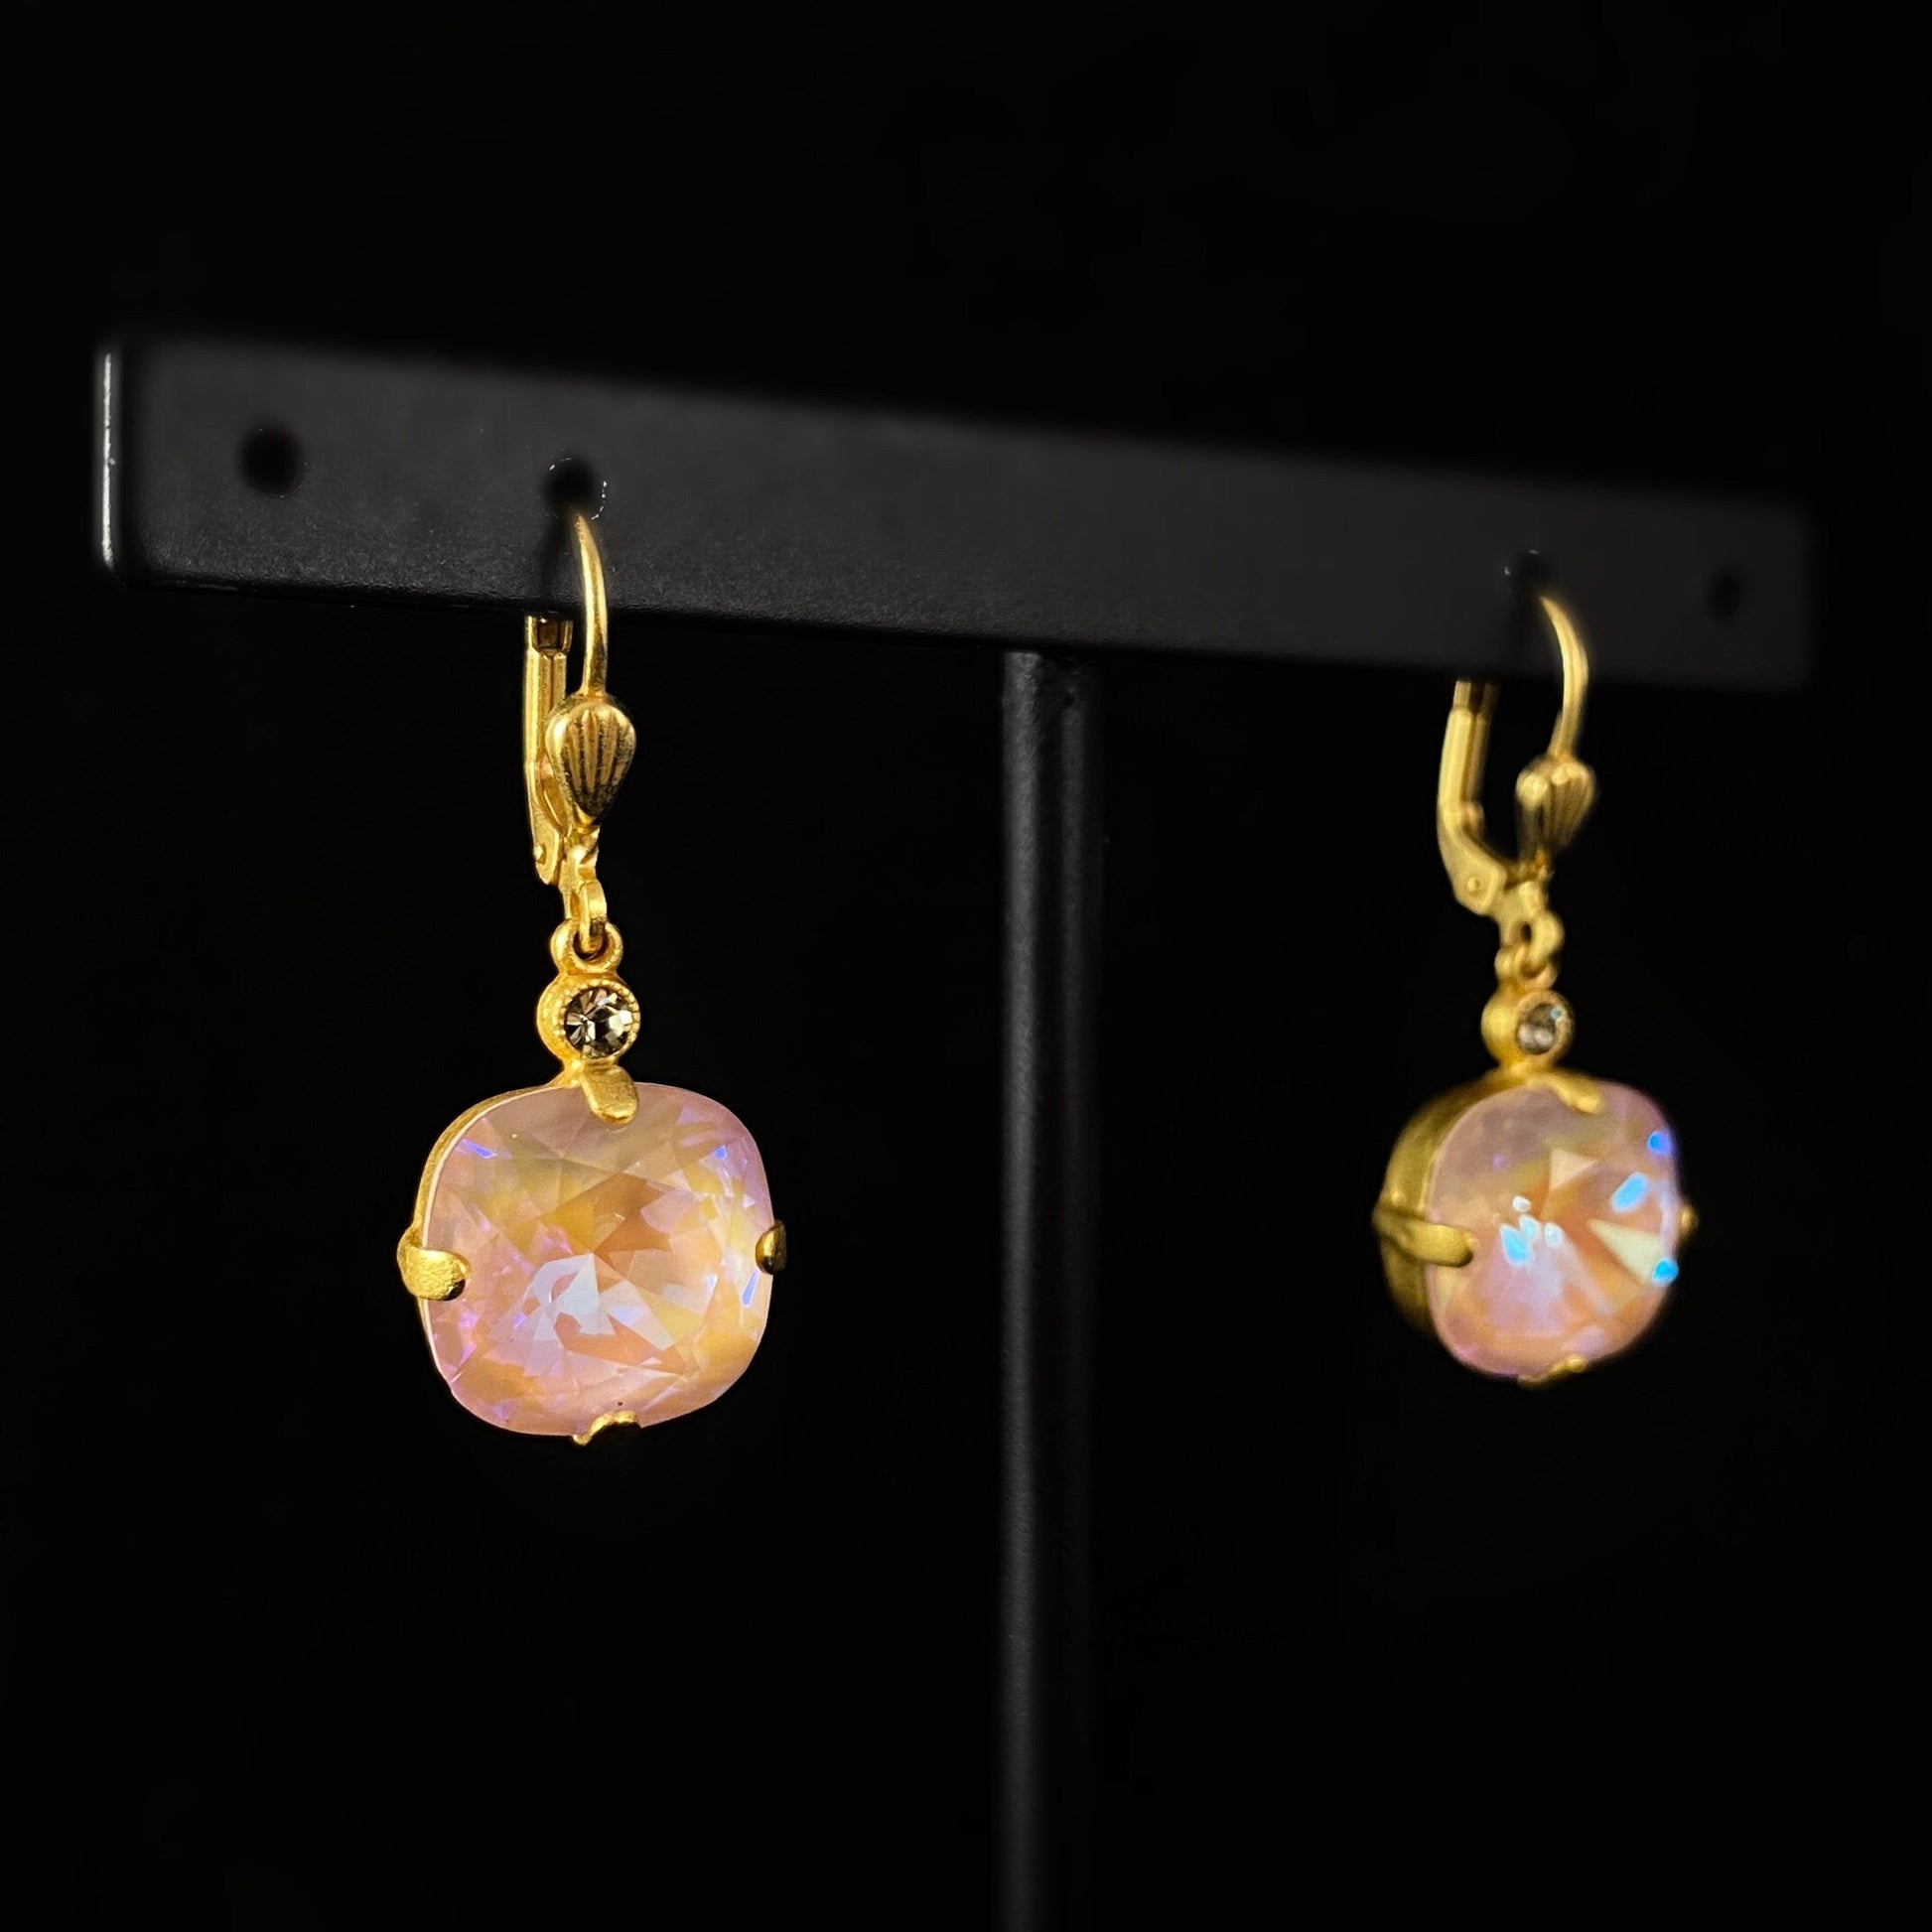 Cushion Cut Swarovski Crystal Drop Earrings, Pink Sunrise - La Vie Parisienne by Catherine Popesco